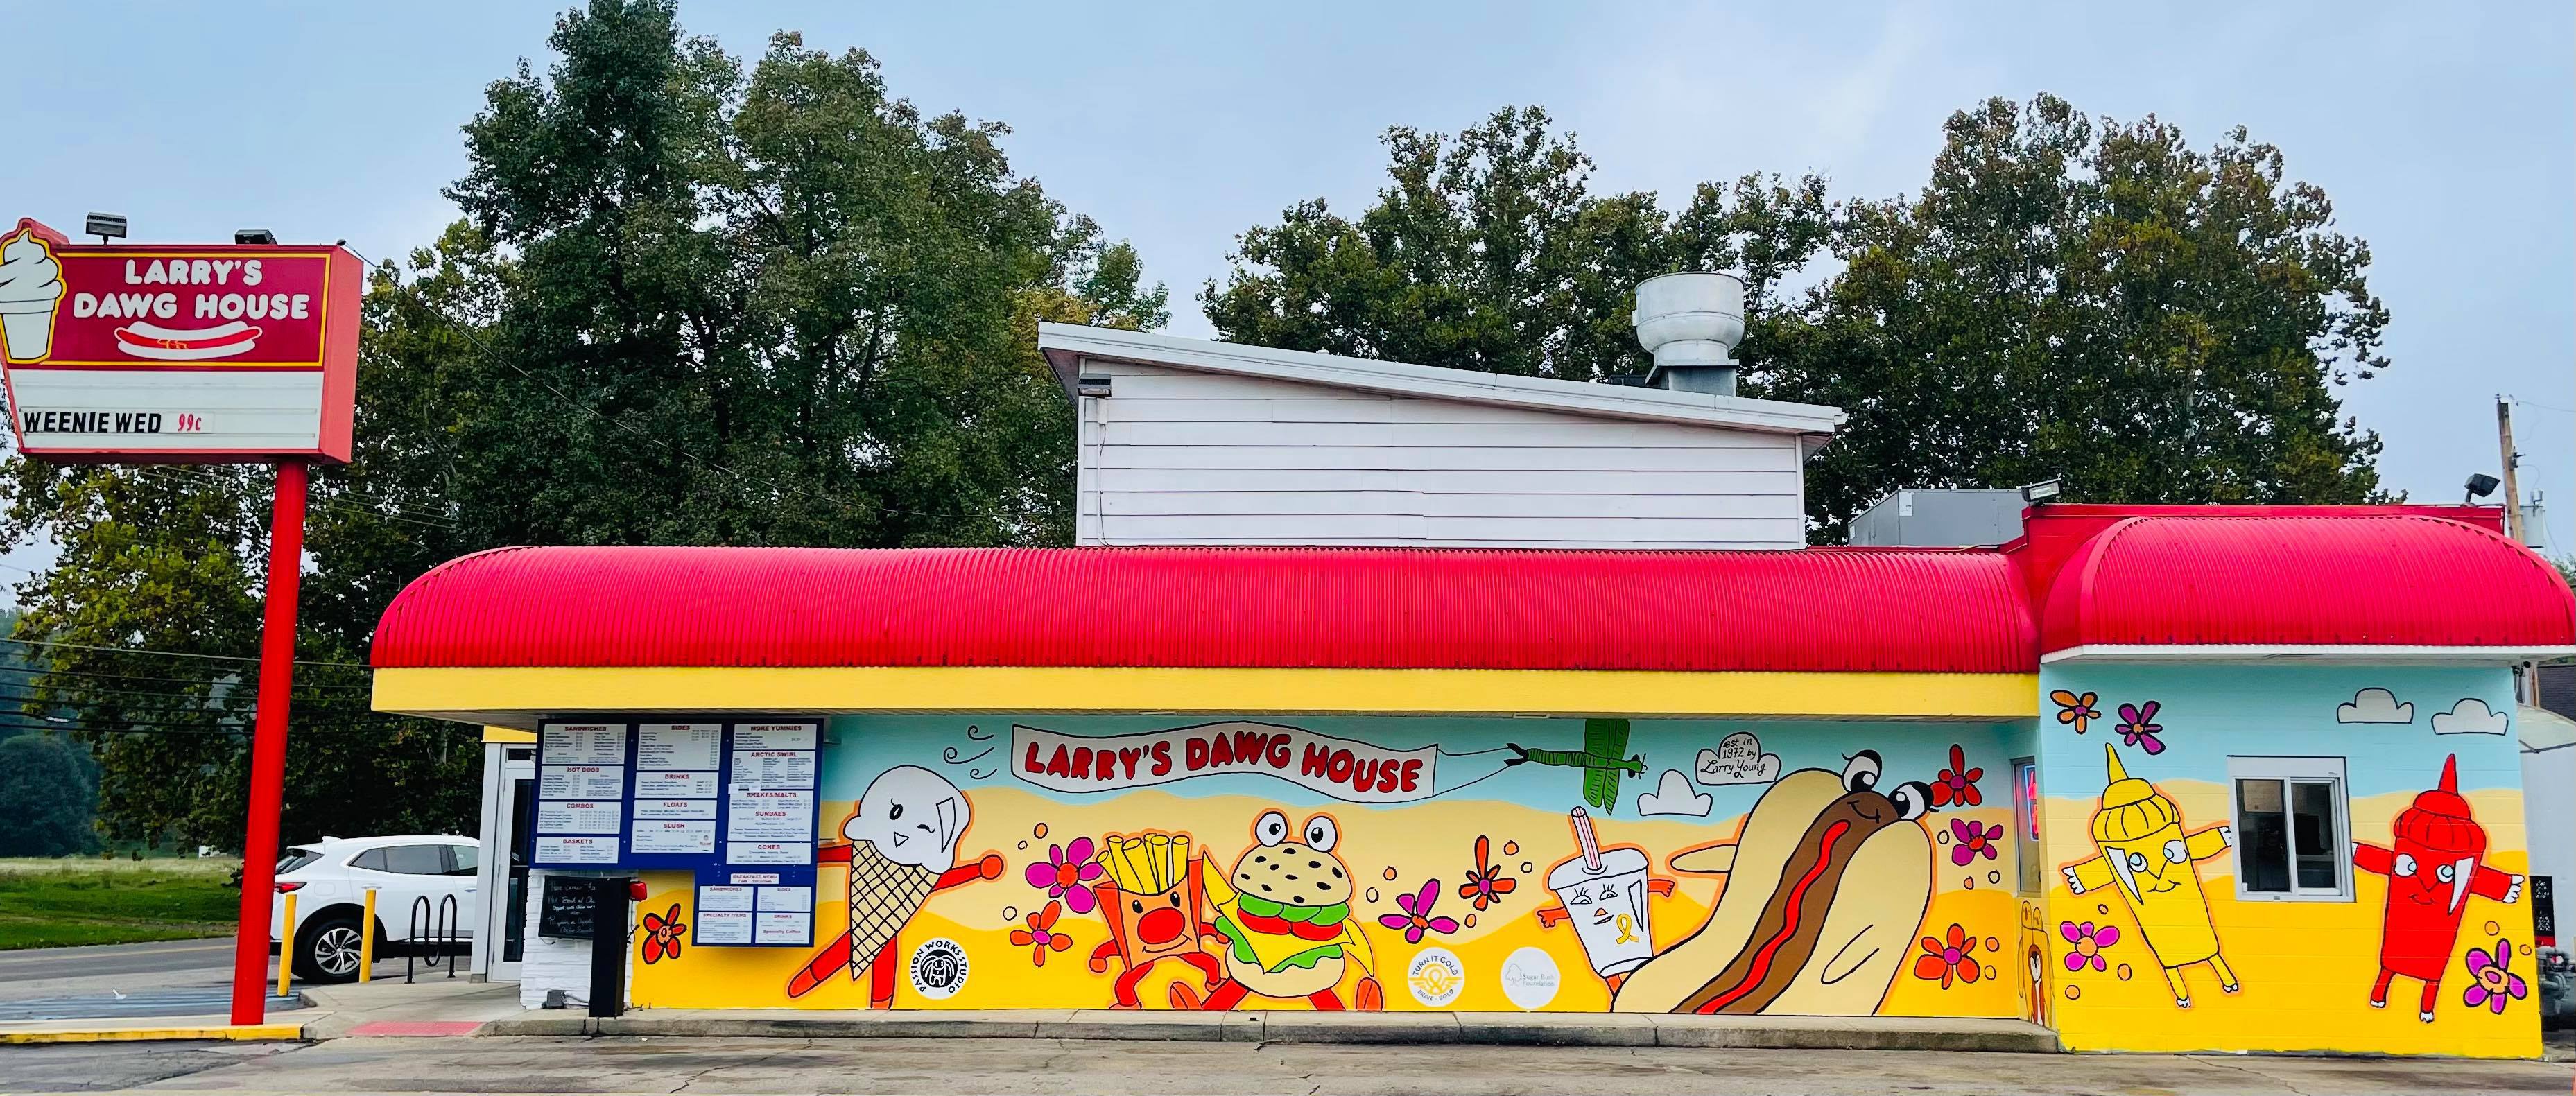 Larry's Dawg House mural